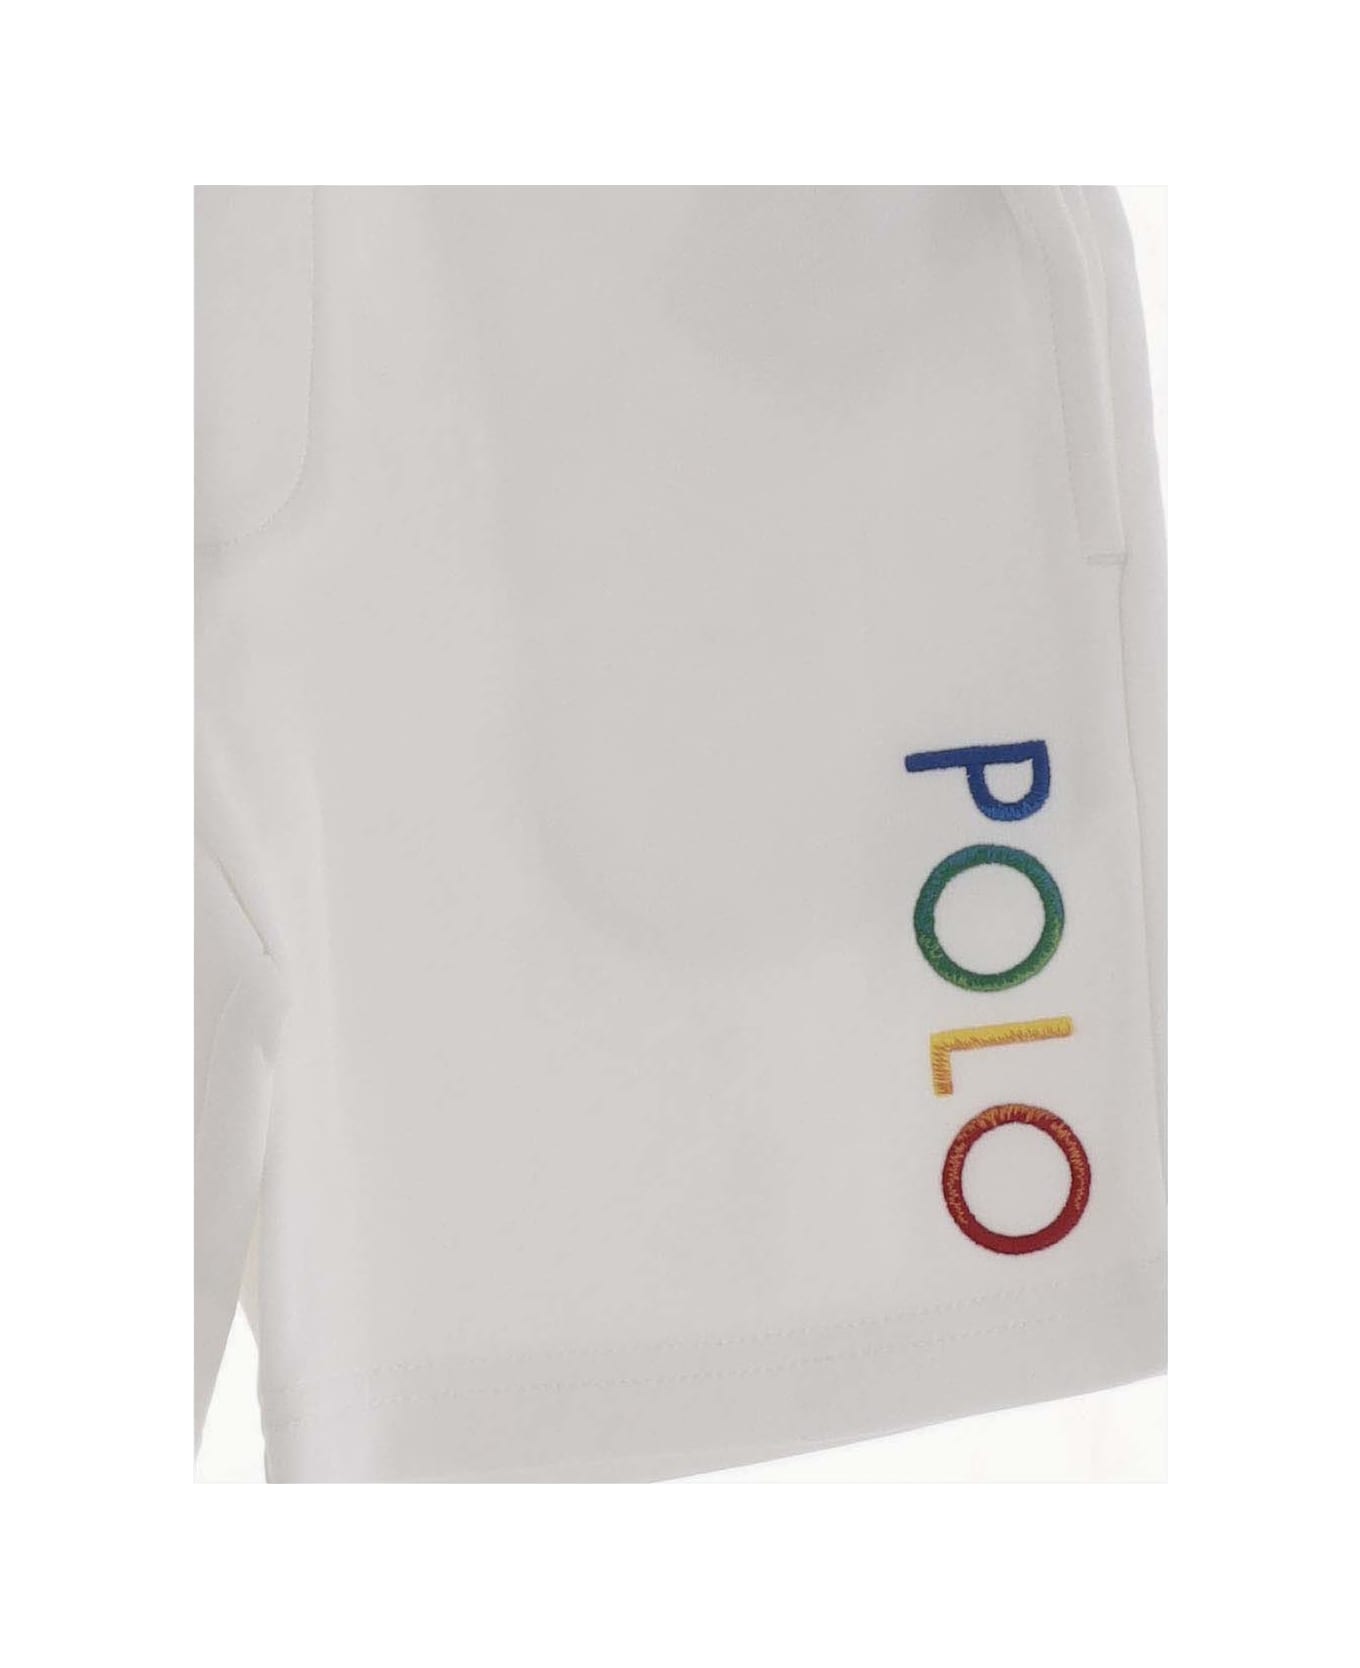 Polo Ralph Lauren Cotton Blend Logo Short Pants - White